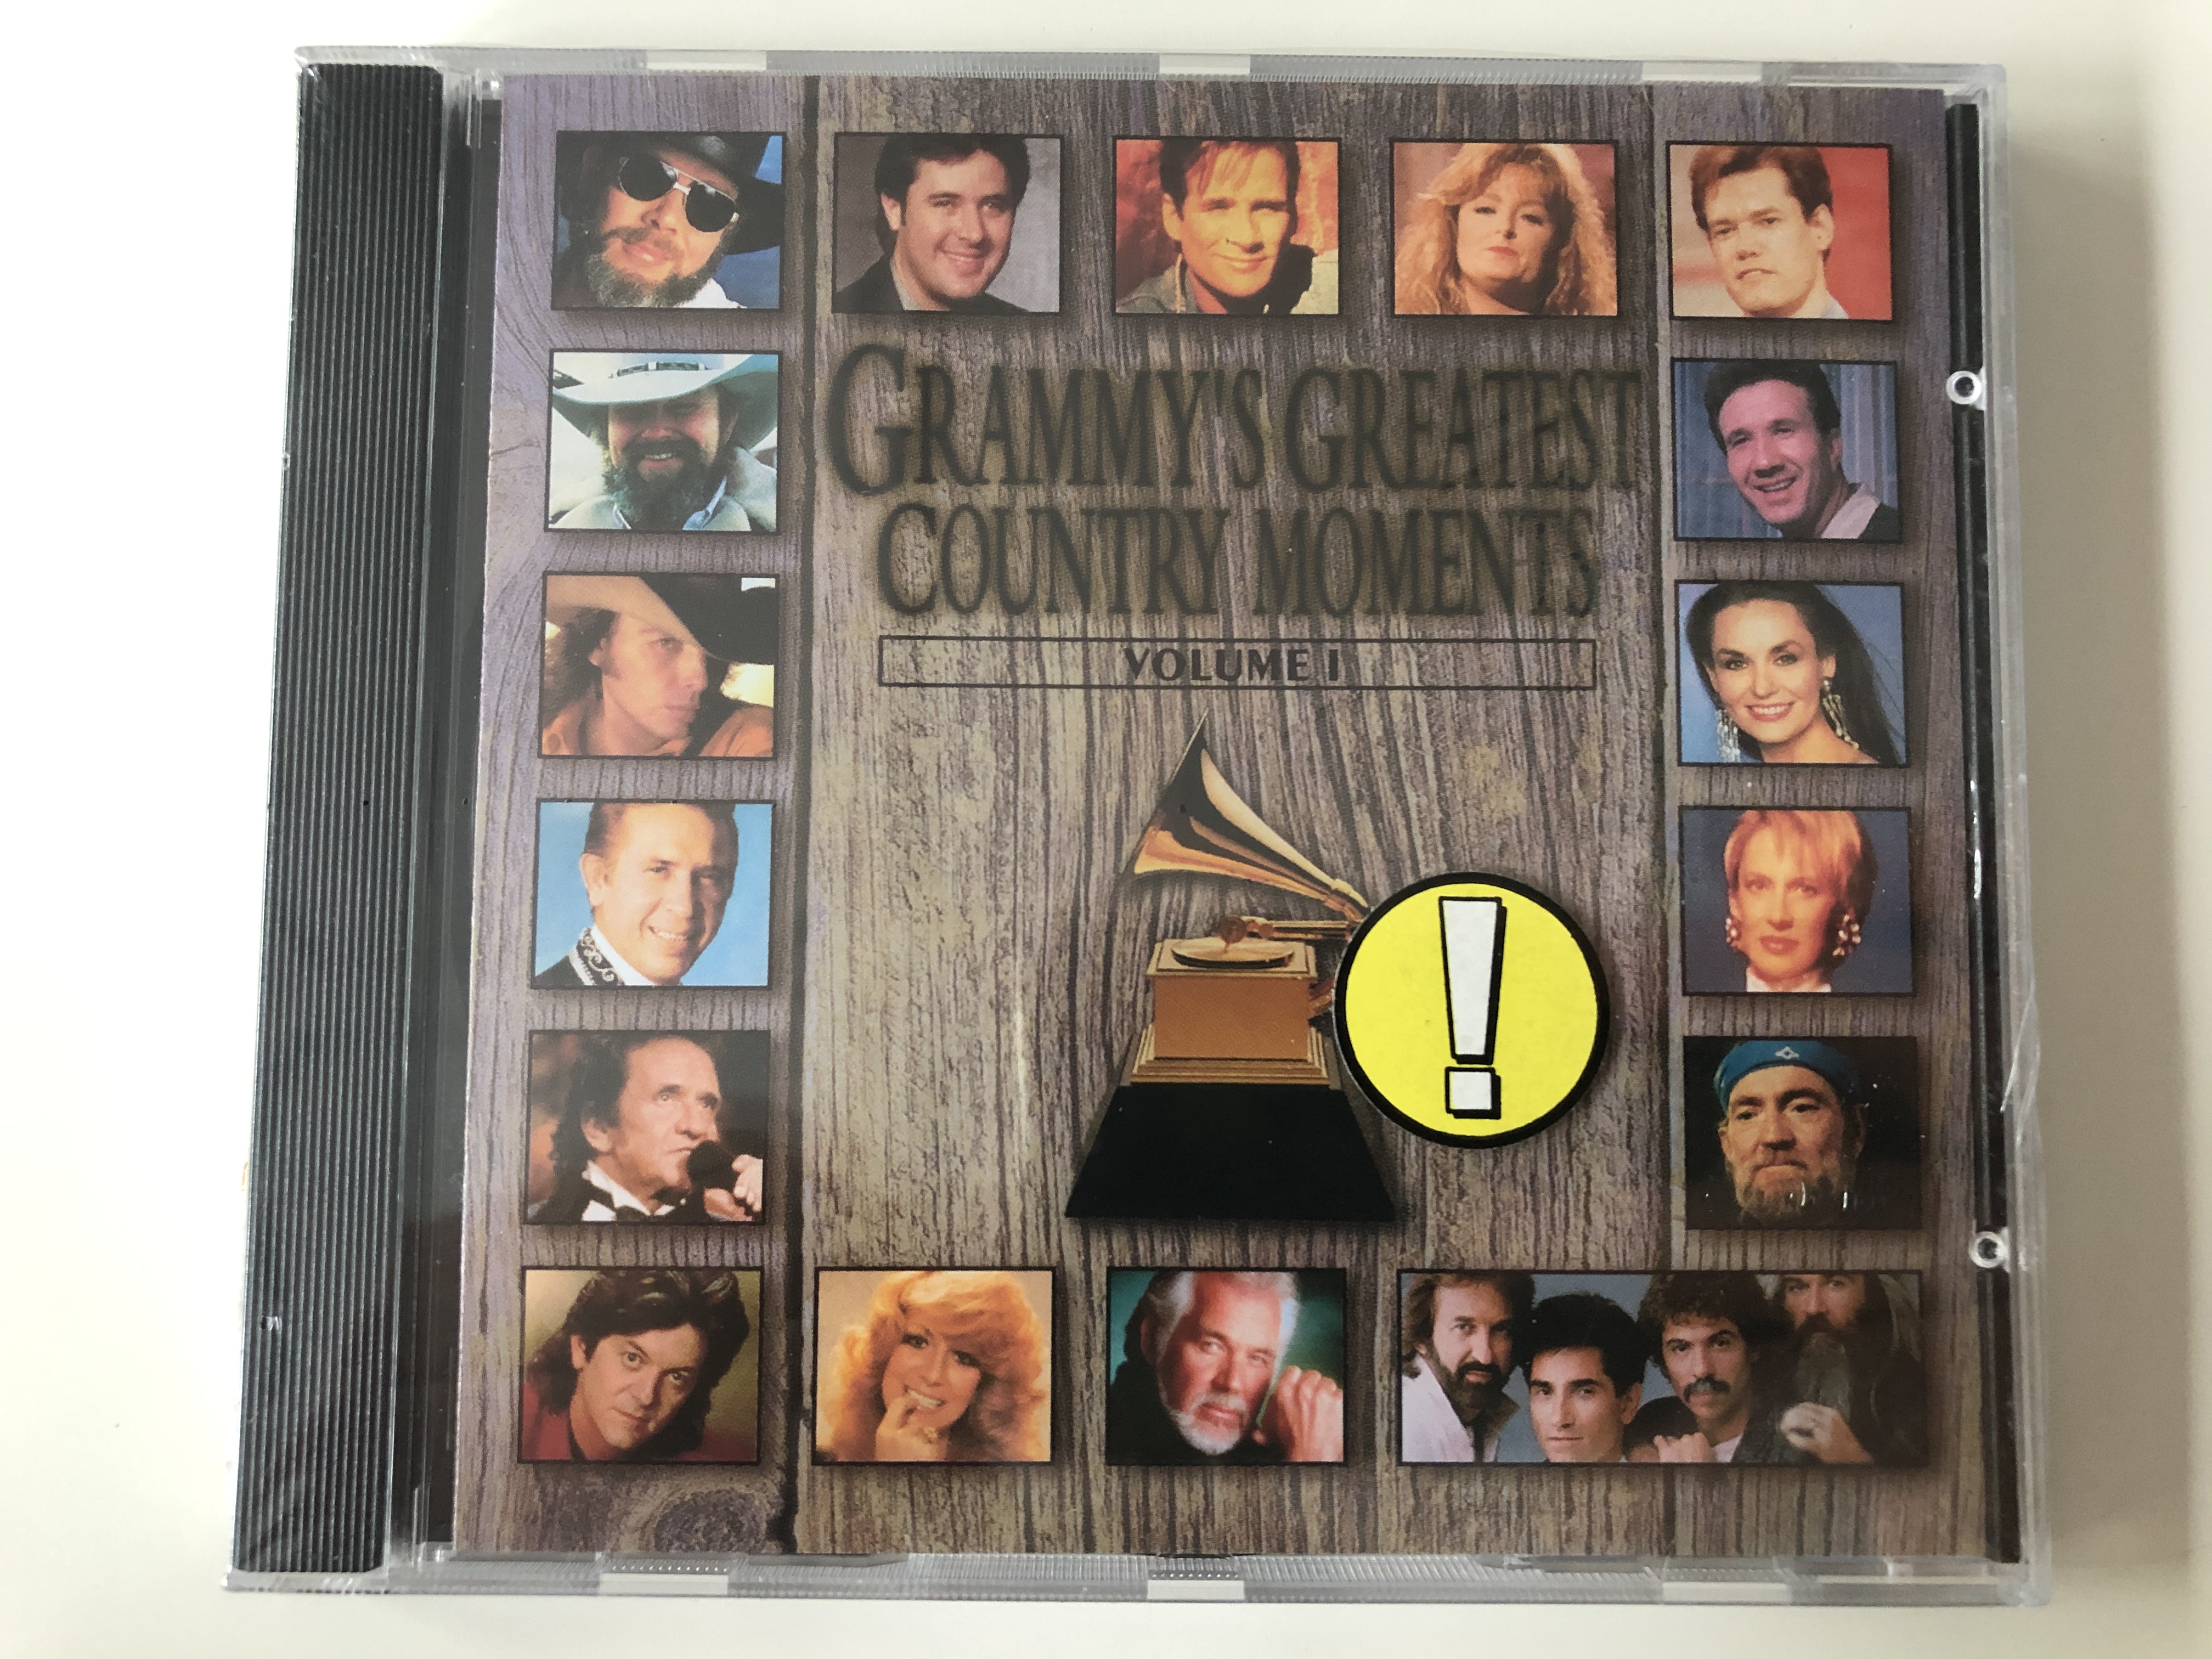 grammy-s-greatest-country-moments-volume-i-atlantic-audio-cd-1994-7567-82584-2-1-.jpg